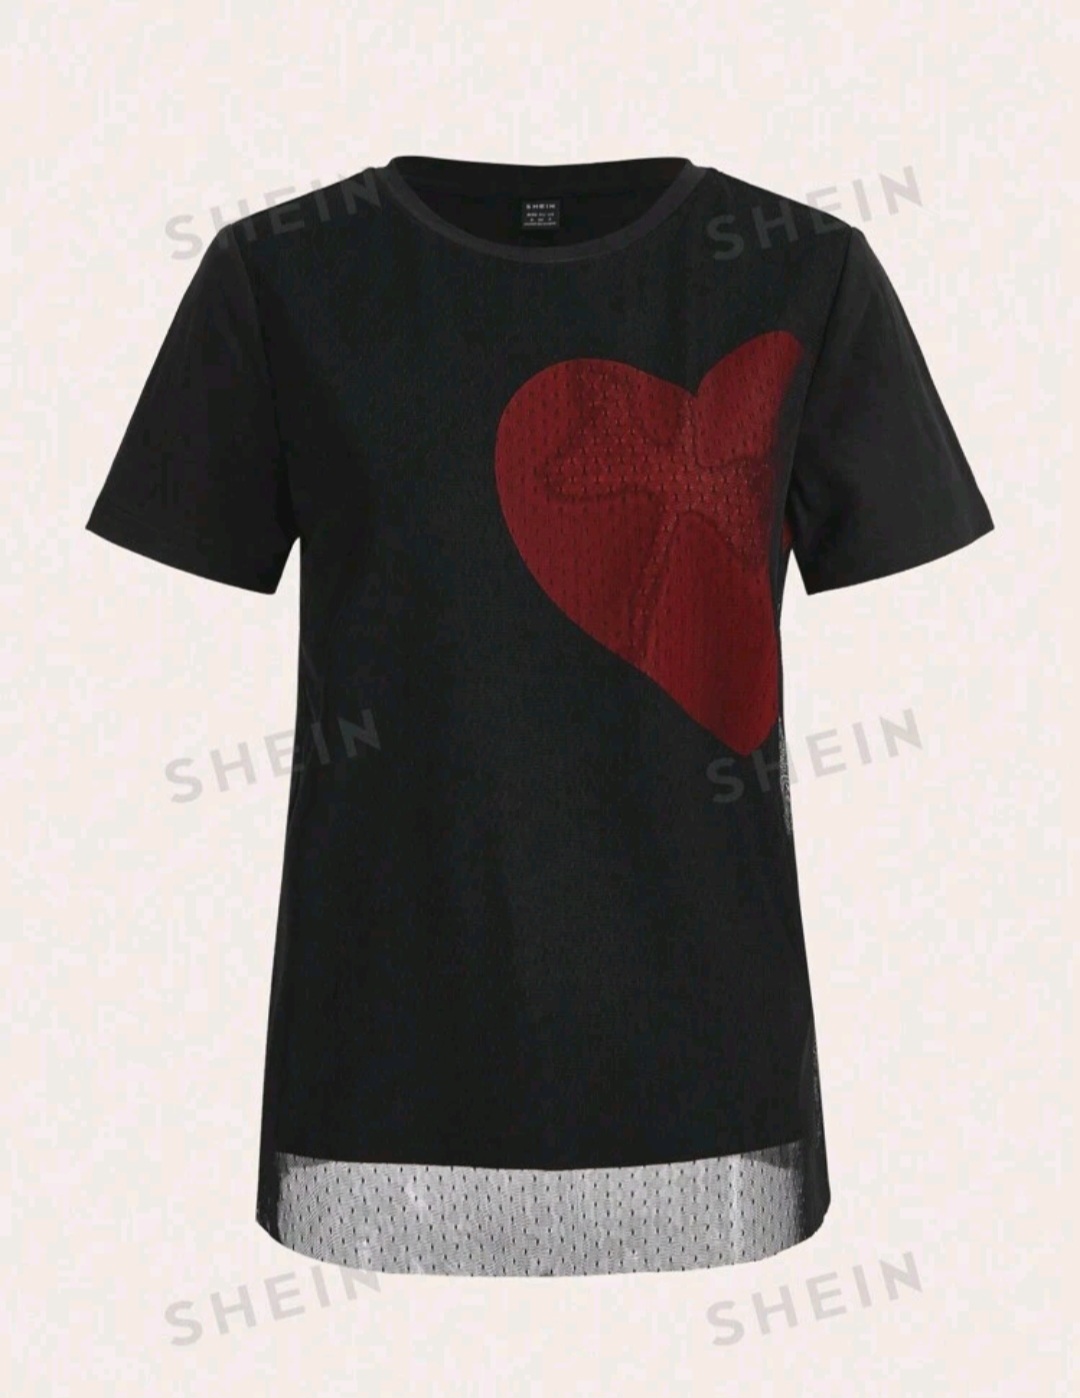 SHEINNeu Summer Ladies' Short Sleeve Black T-Shirt With Mesh Splicing Heart-Shaped Print Pattern